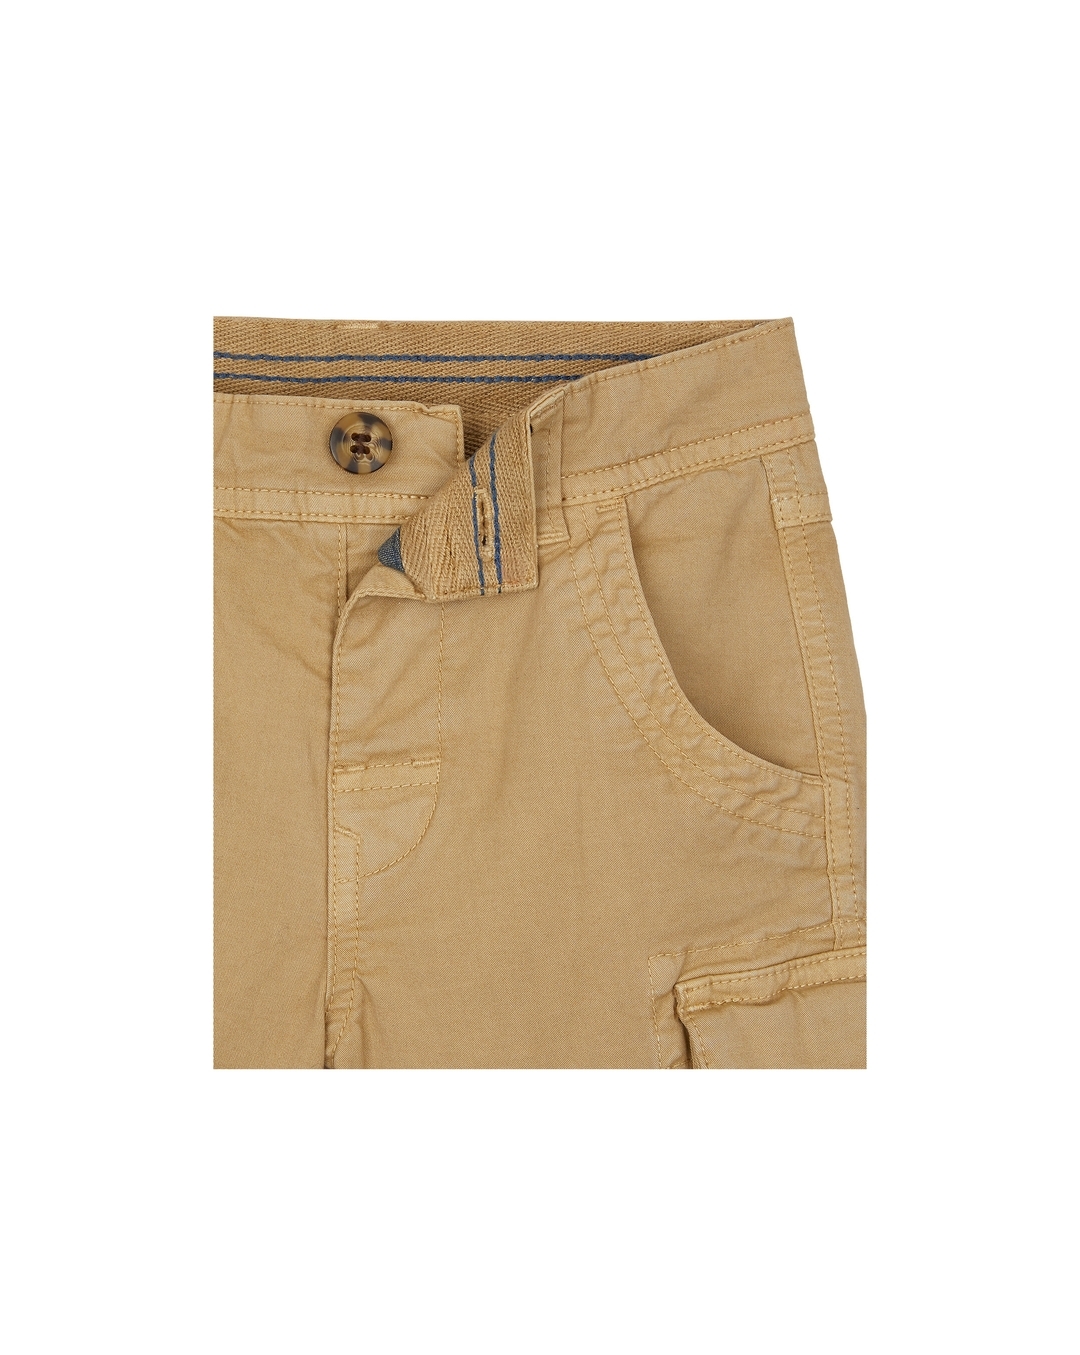 KLHHG Summer Men's Outdoor Camouflage Cargo Shorts Pocket Cotton Casual  Half Pants Mid Waist Drawstring Loose Shorts Bib Overalls 7XL (Size :  XXX-Large) price in UAE | Amazon UAE | kanbkam